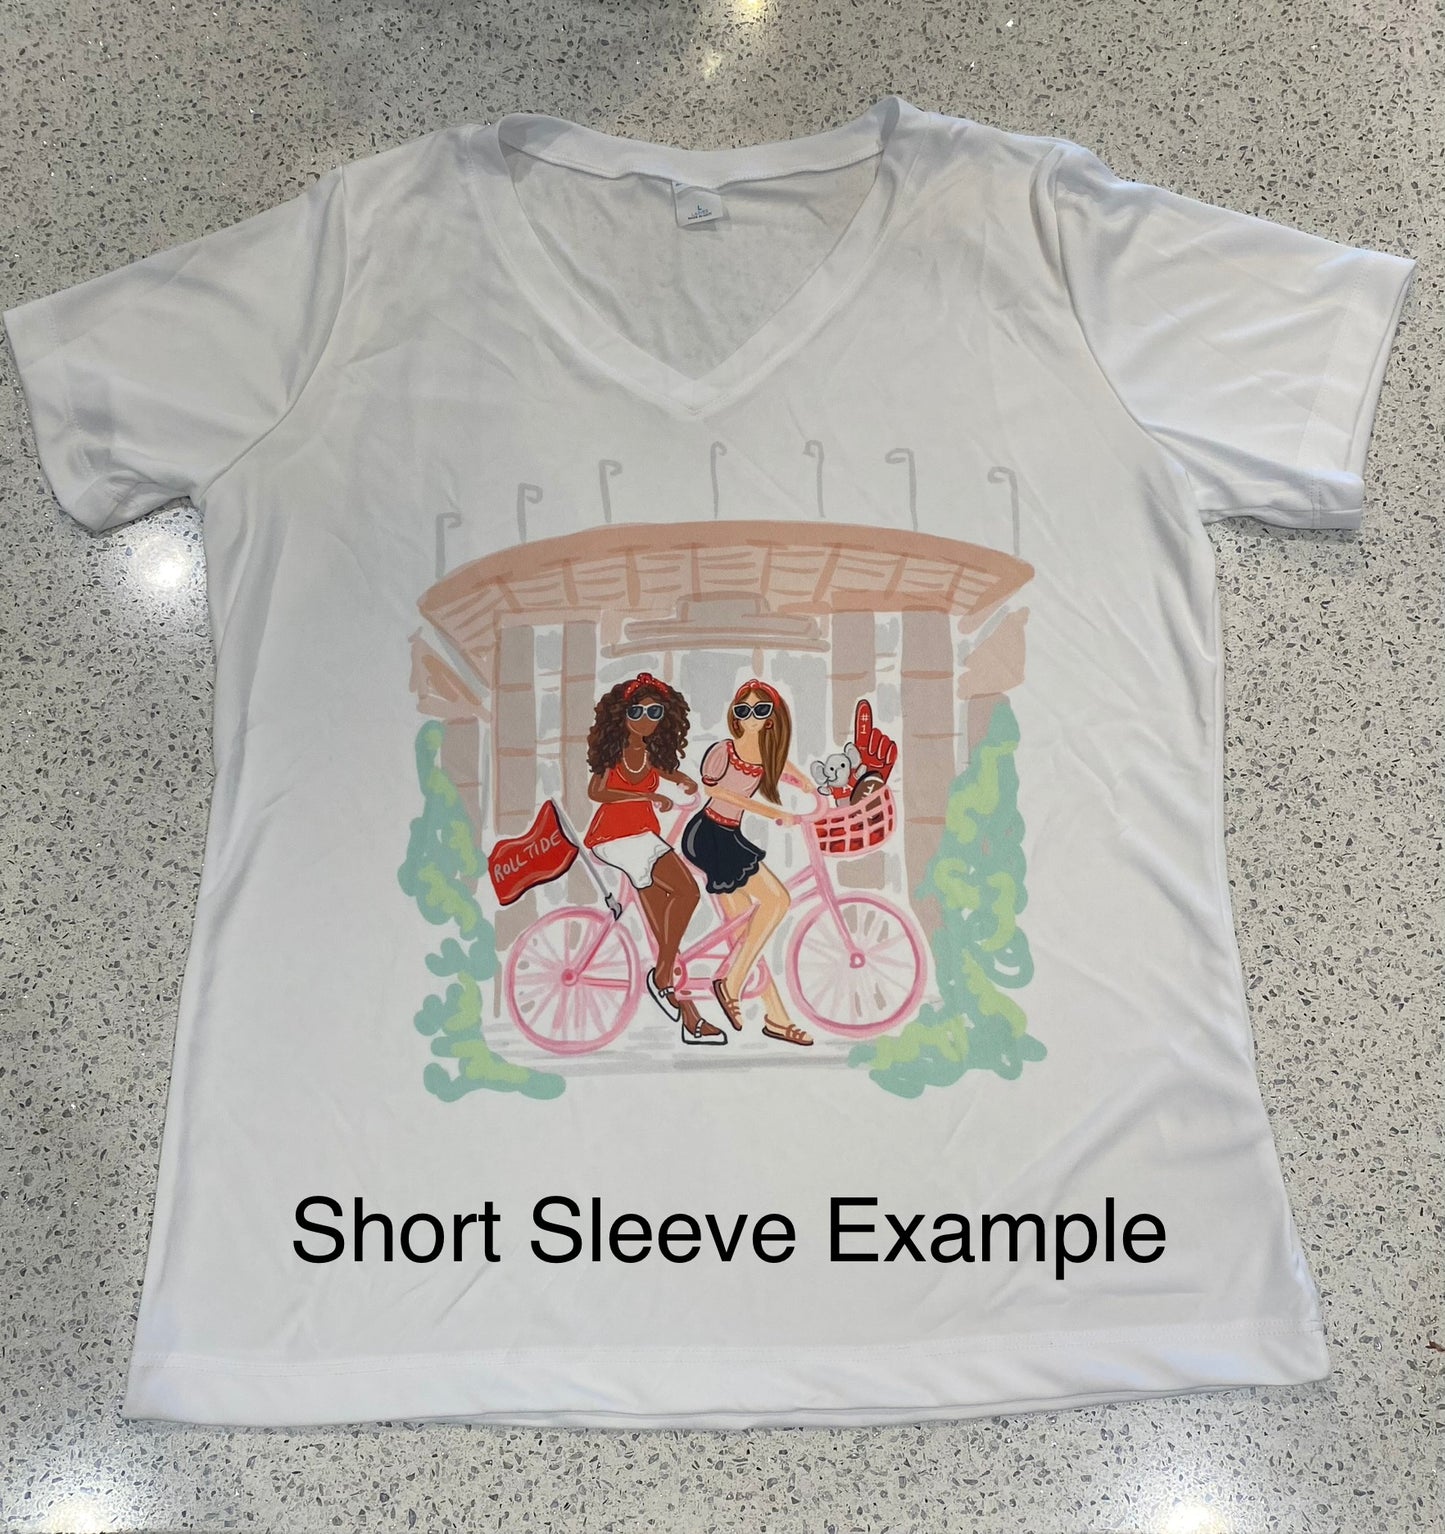 SALE! Texas Longhorns Inspired Illustration Shirts